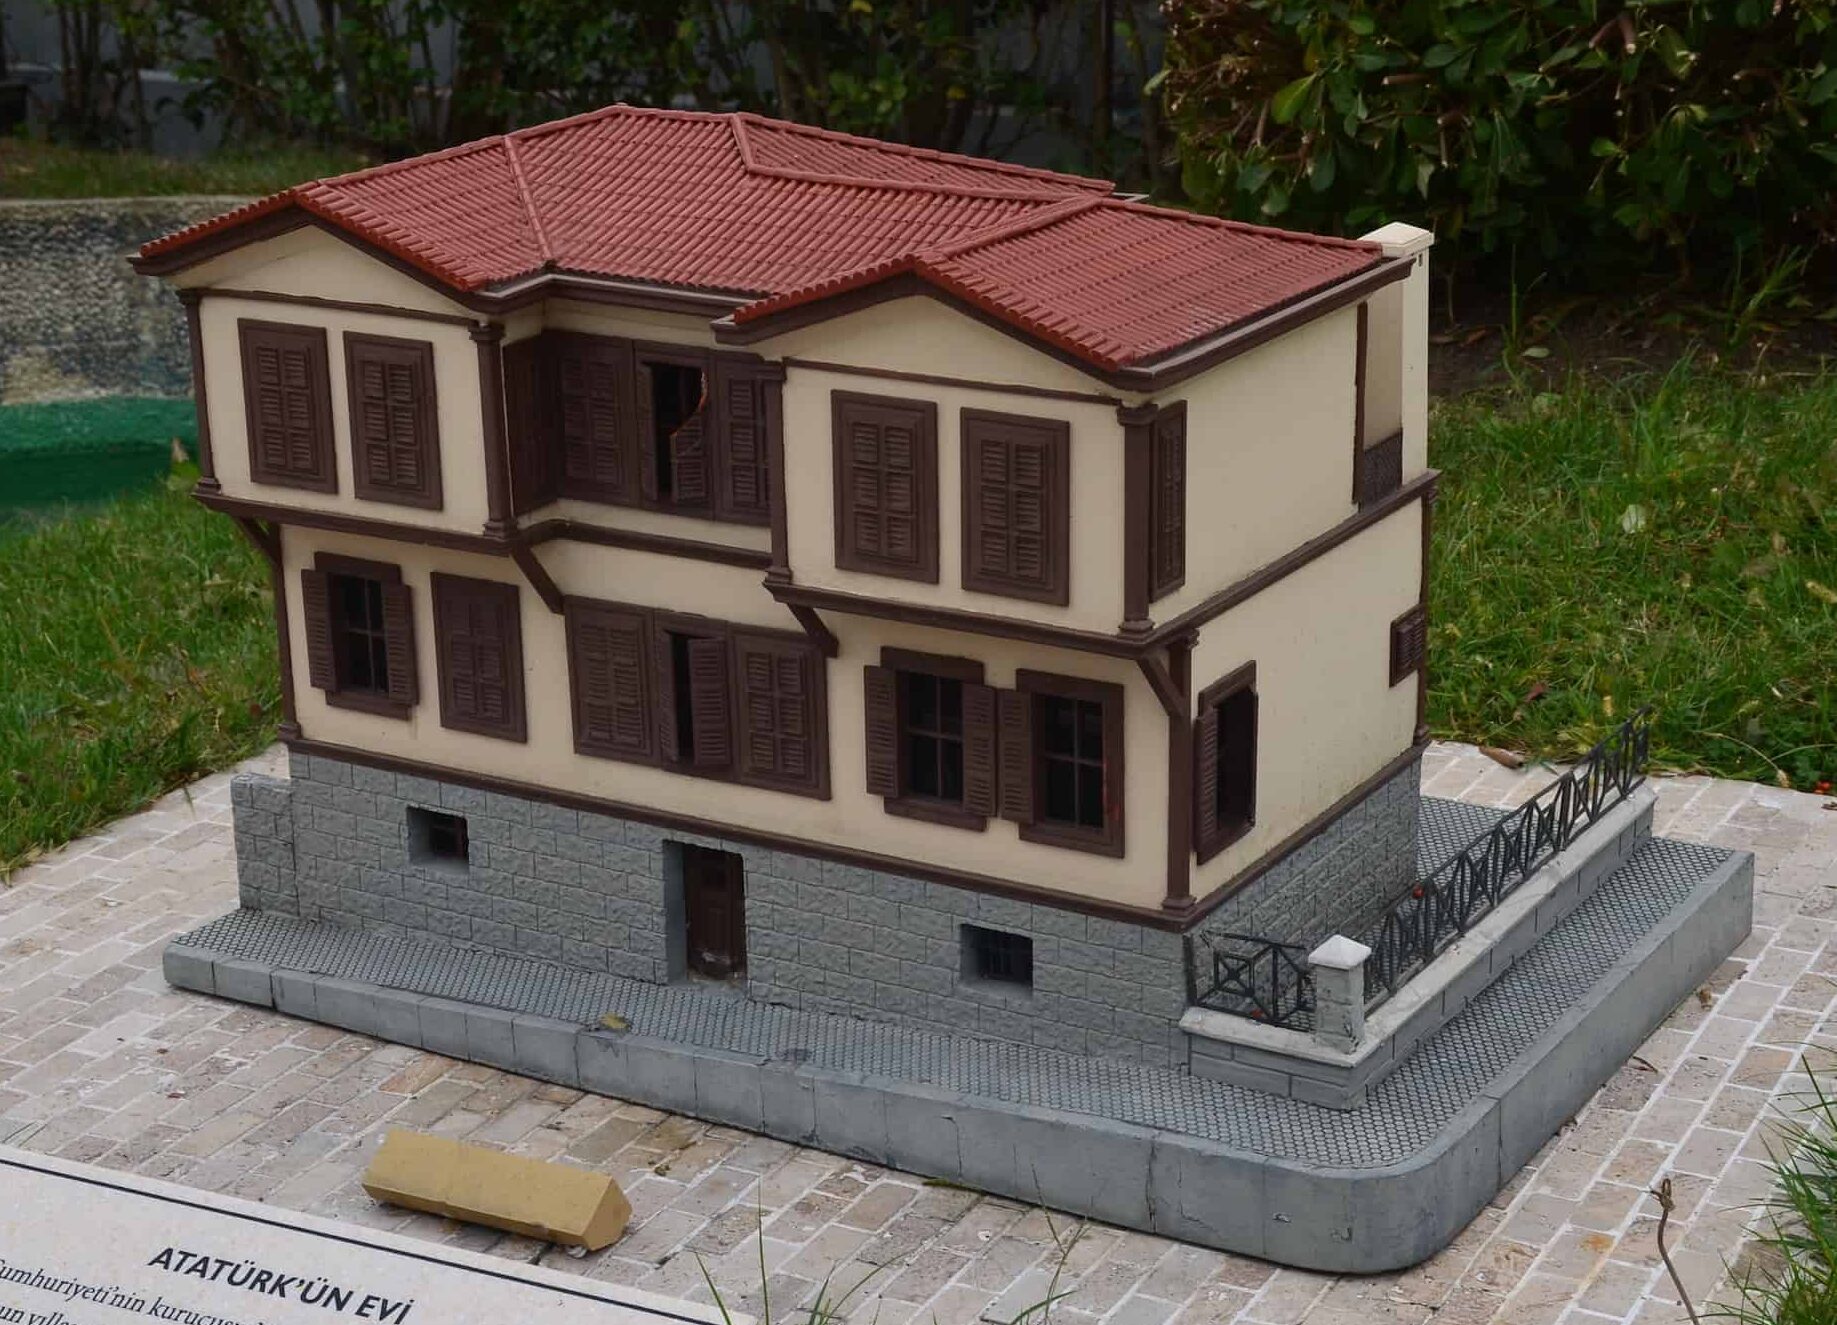 Model of Atatürk's birthplace, Thessaloniki, Greece, 19th century at Miniatürk in Istanbul, Turkey